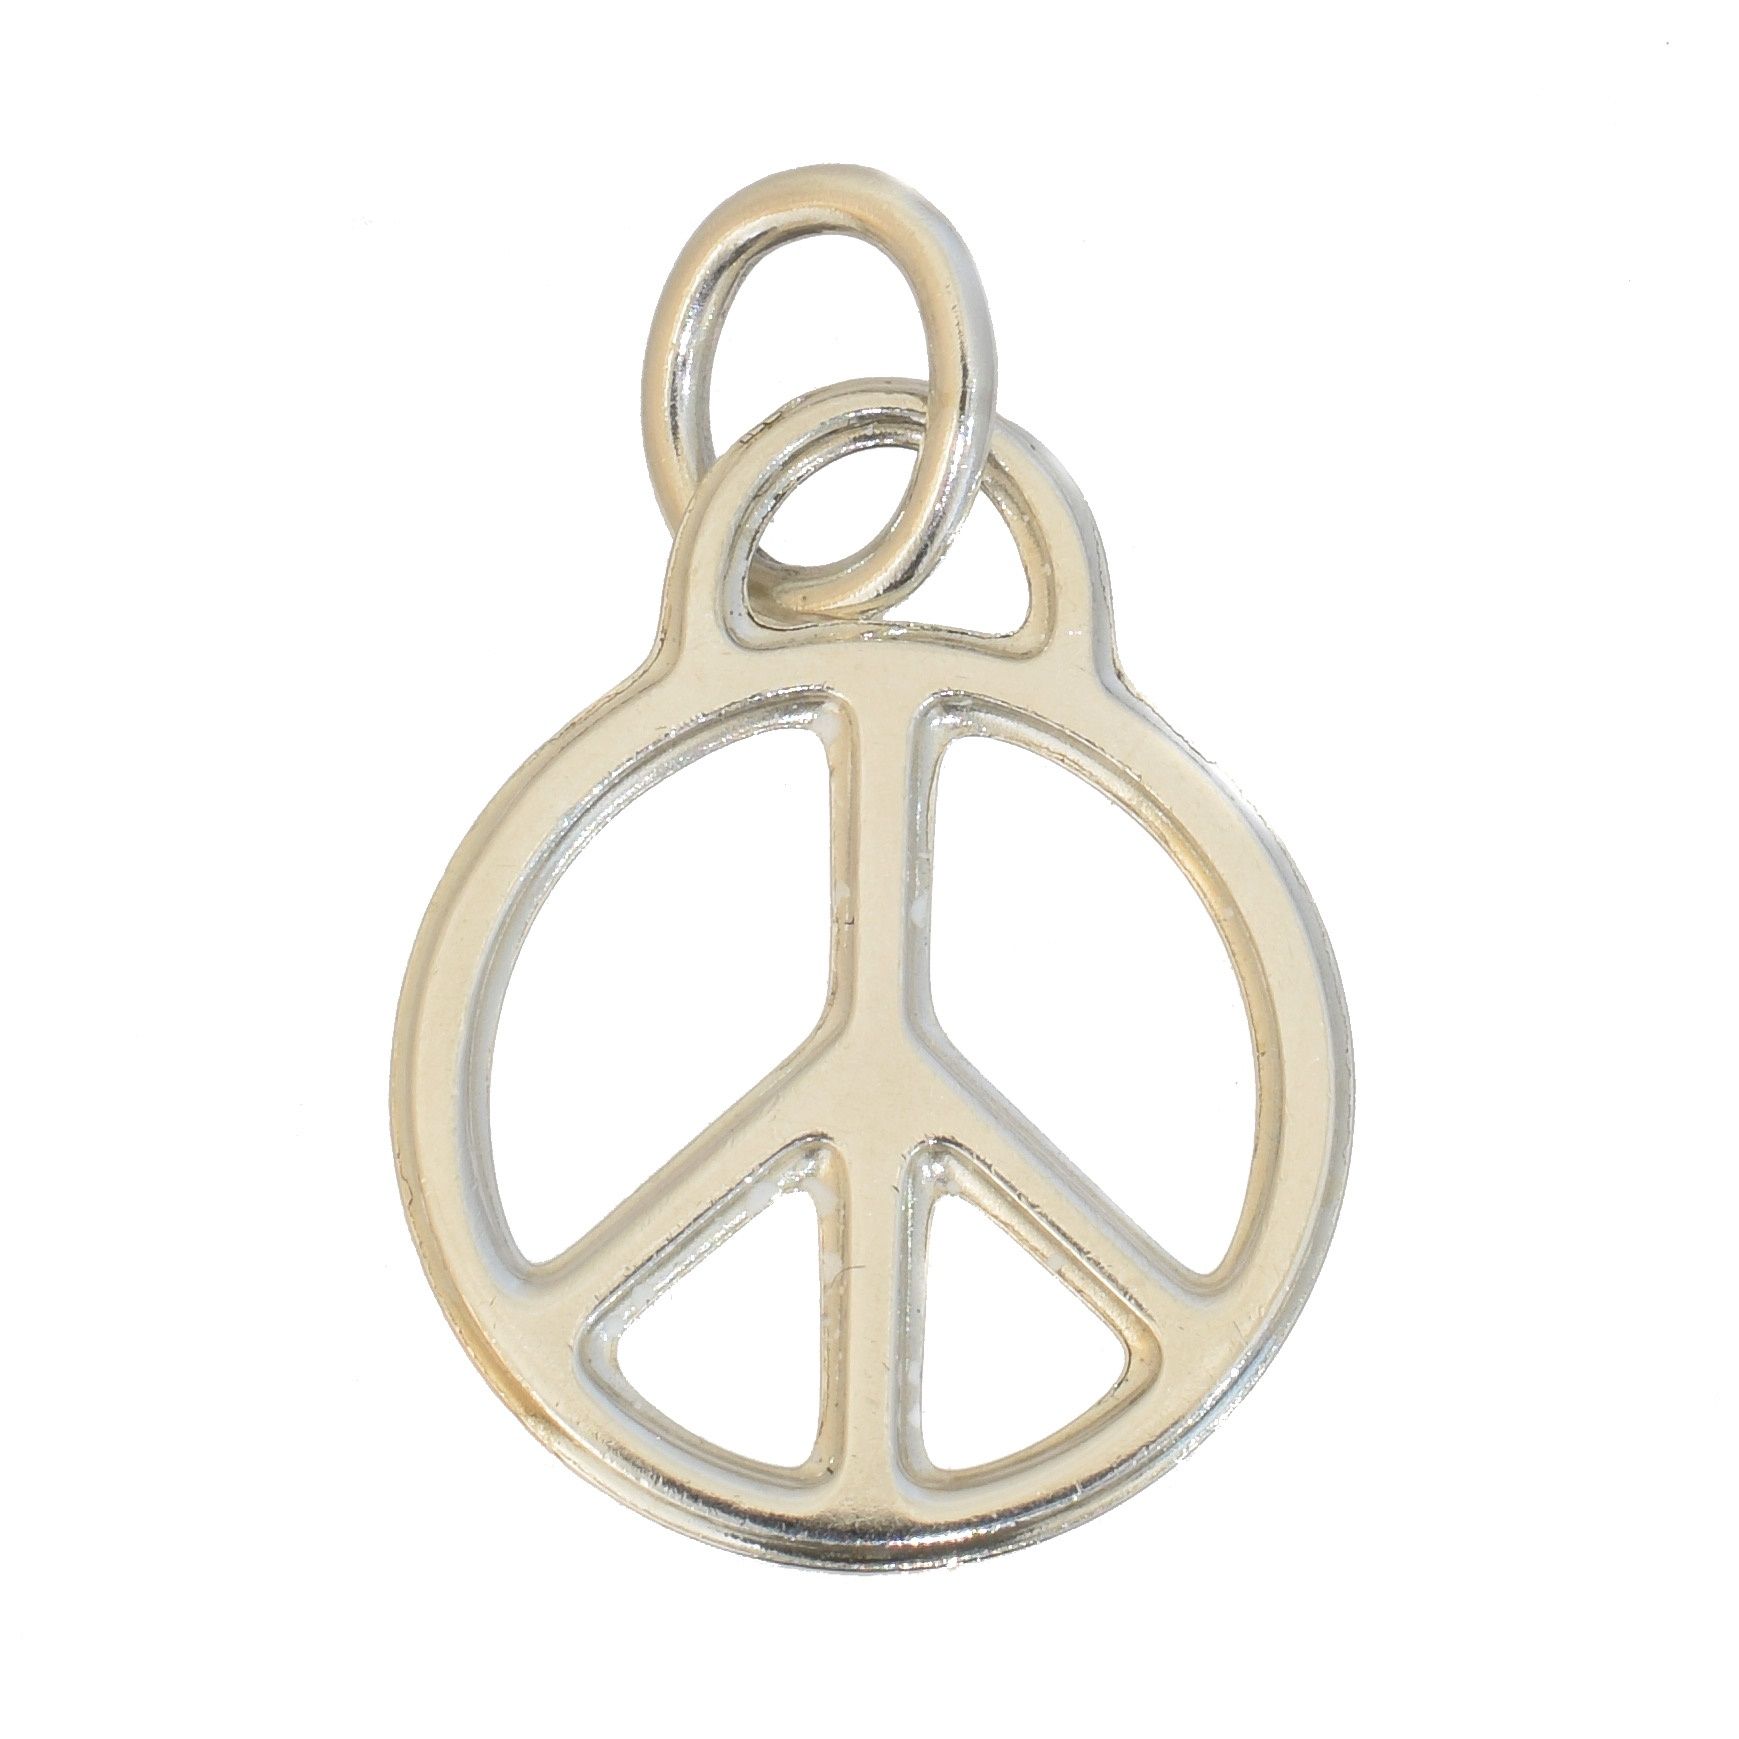 A Tiffany & Co. Peace pendant, 
Colgante de la paz de Tiffany & Co., firmado T&C&hellip;